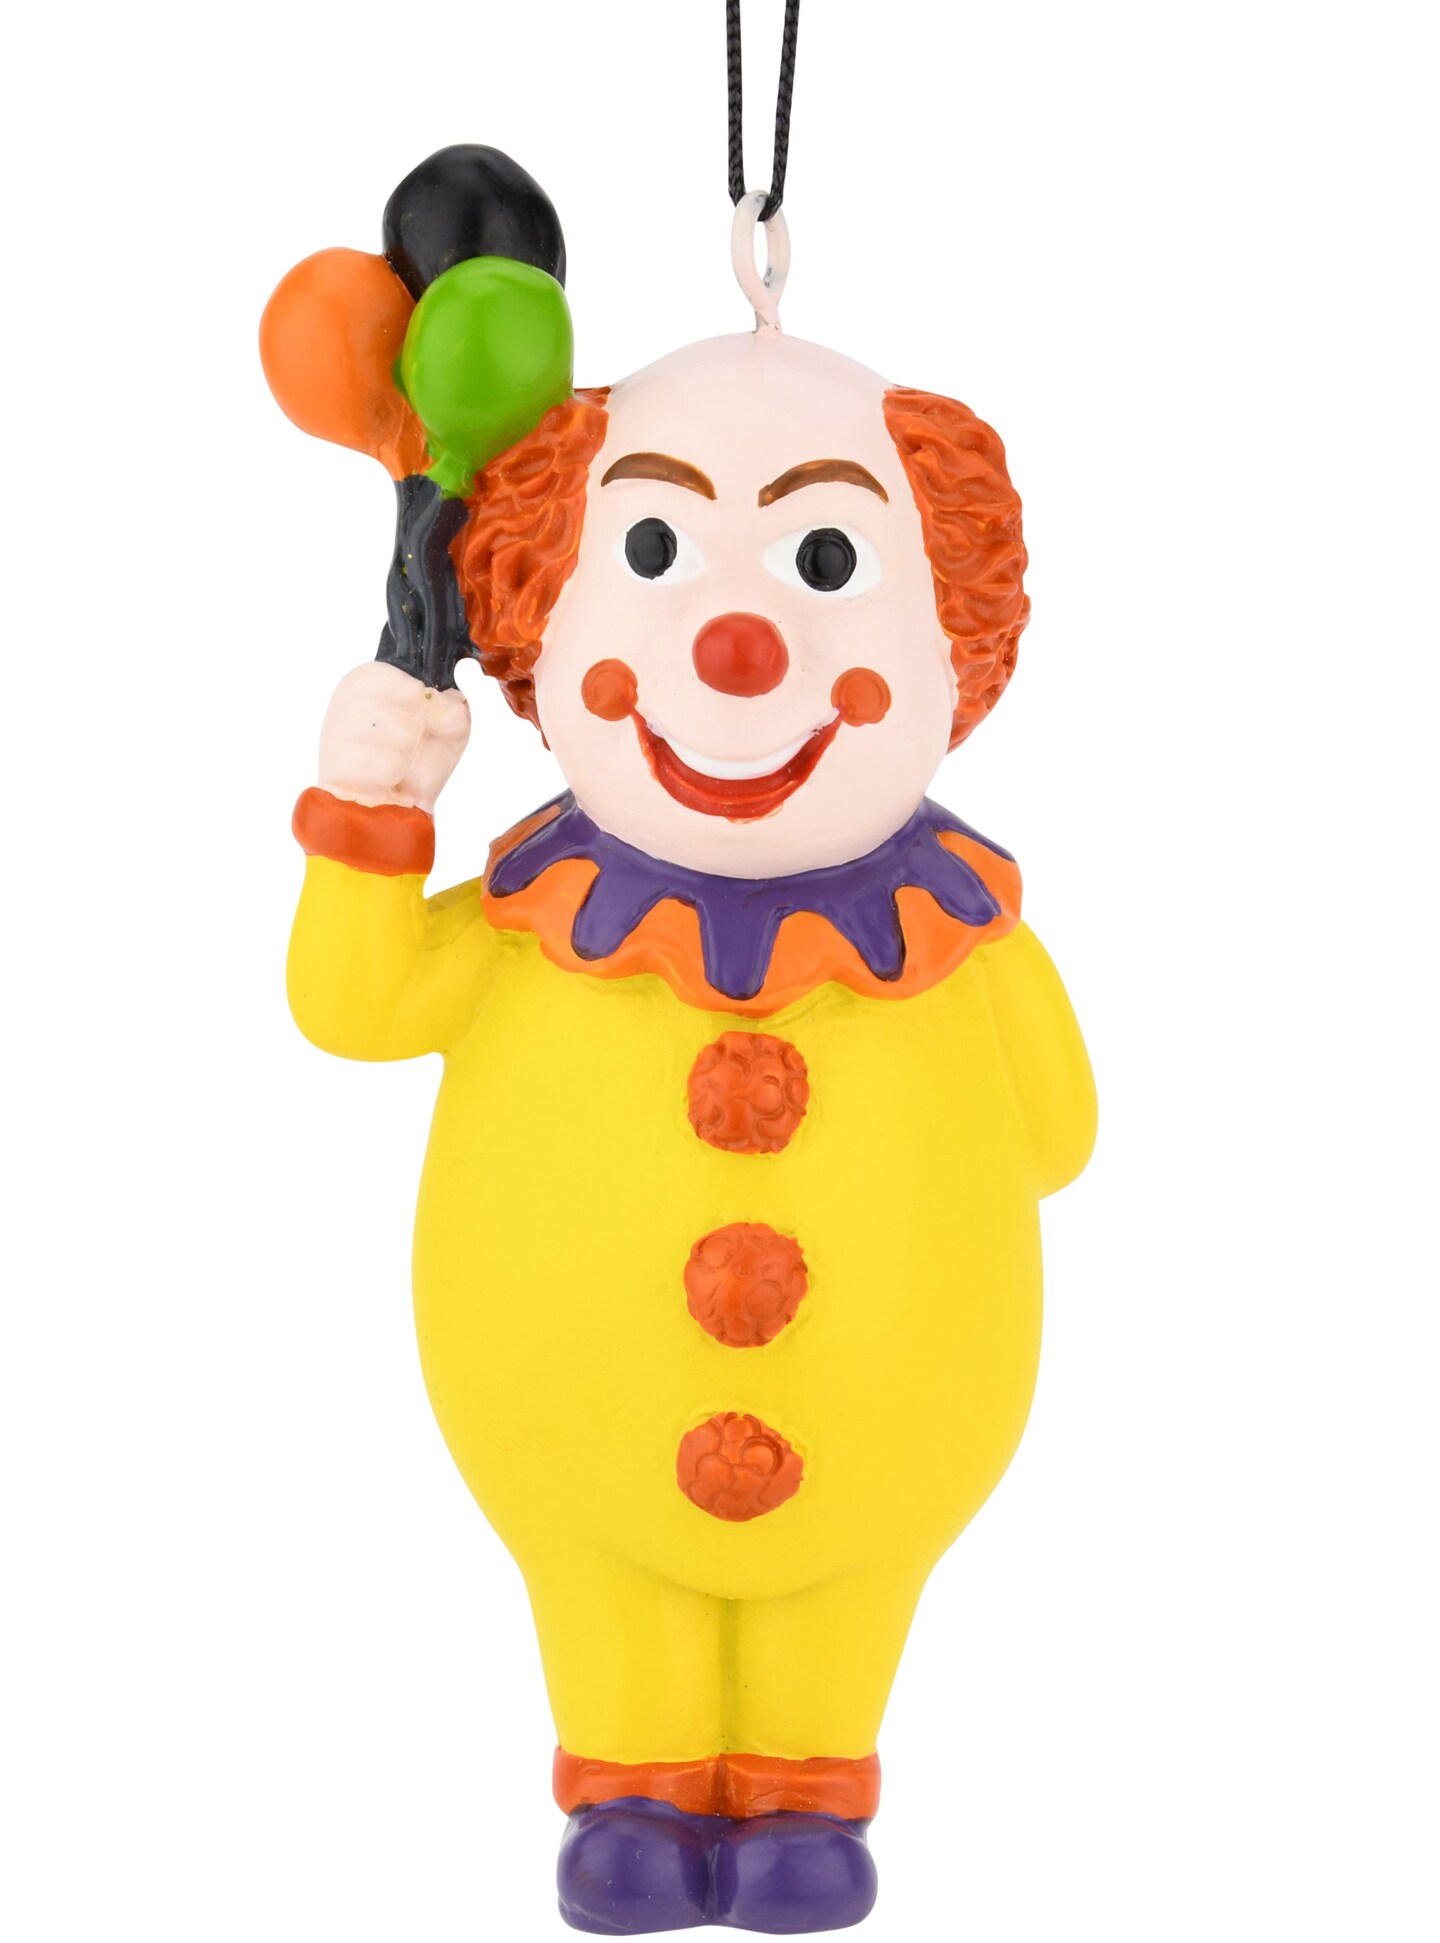 Creepy Clown Holding a Bloody Hatchet Halloween Ornament